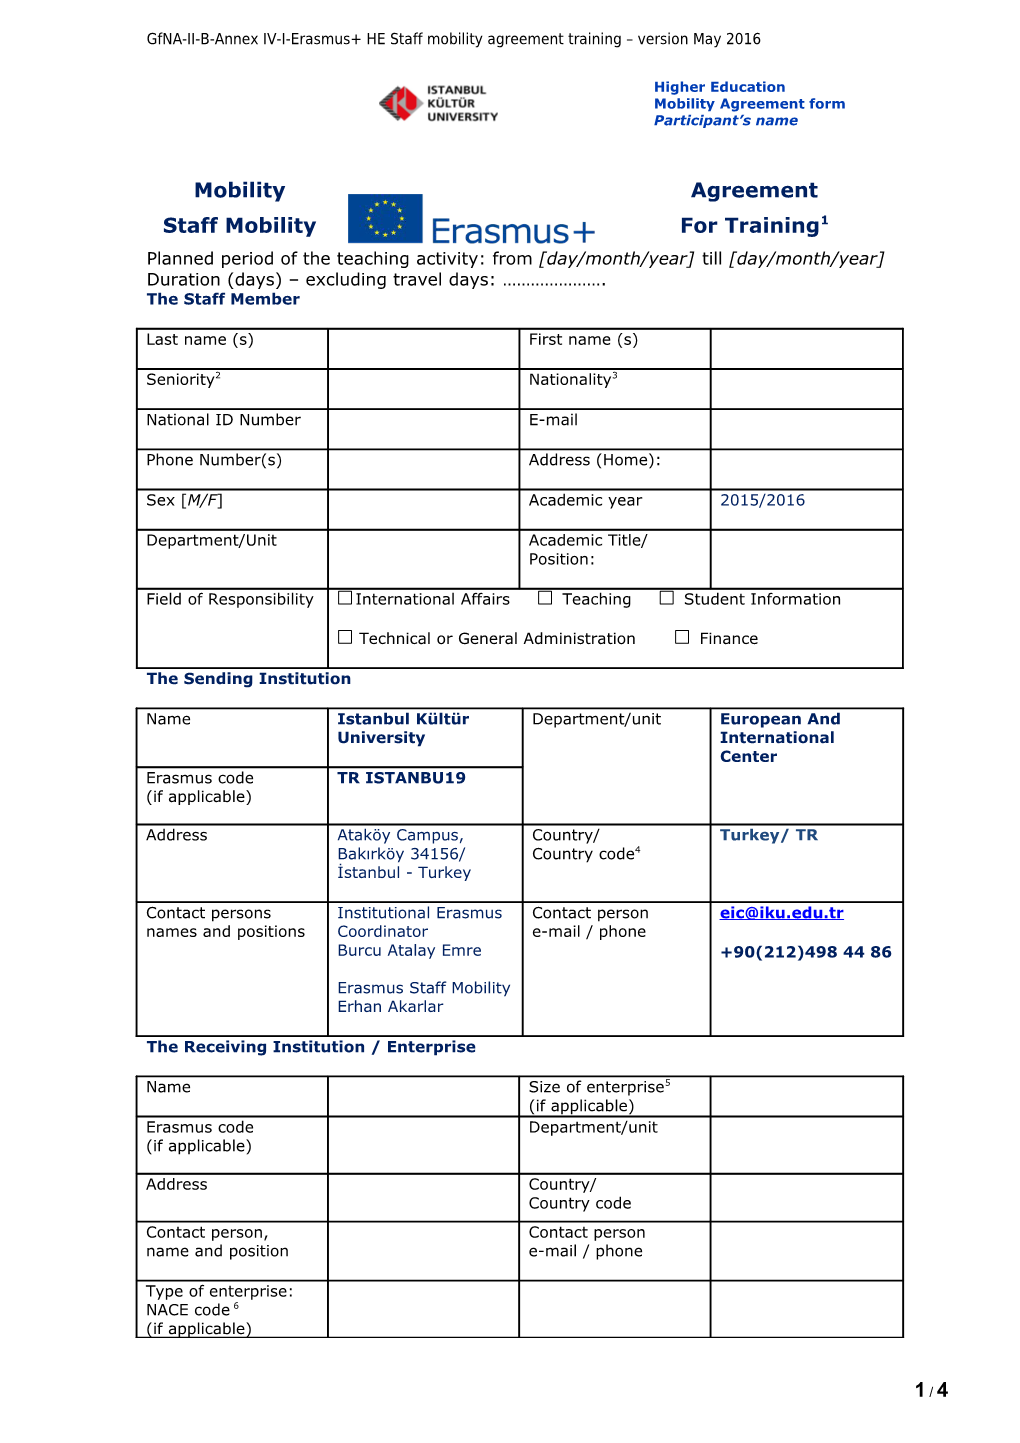 Gfna-II-B-Annex IV-I-Erasmus+ HE Staff Mobility Agreement Training Version May 2016